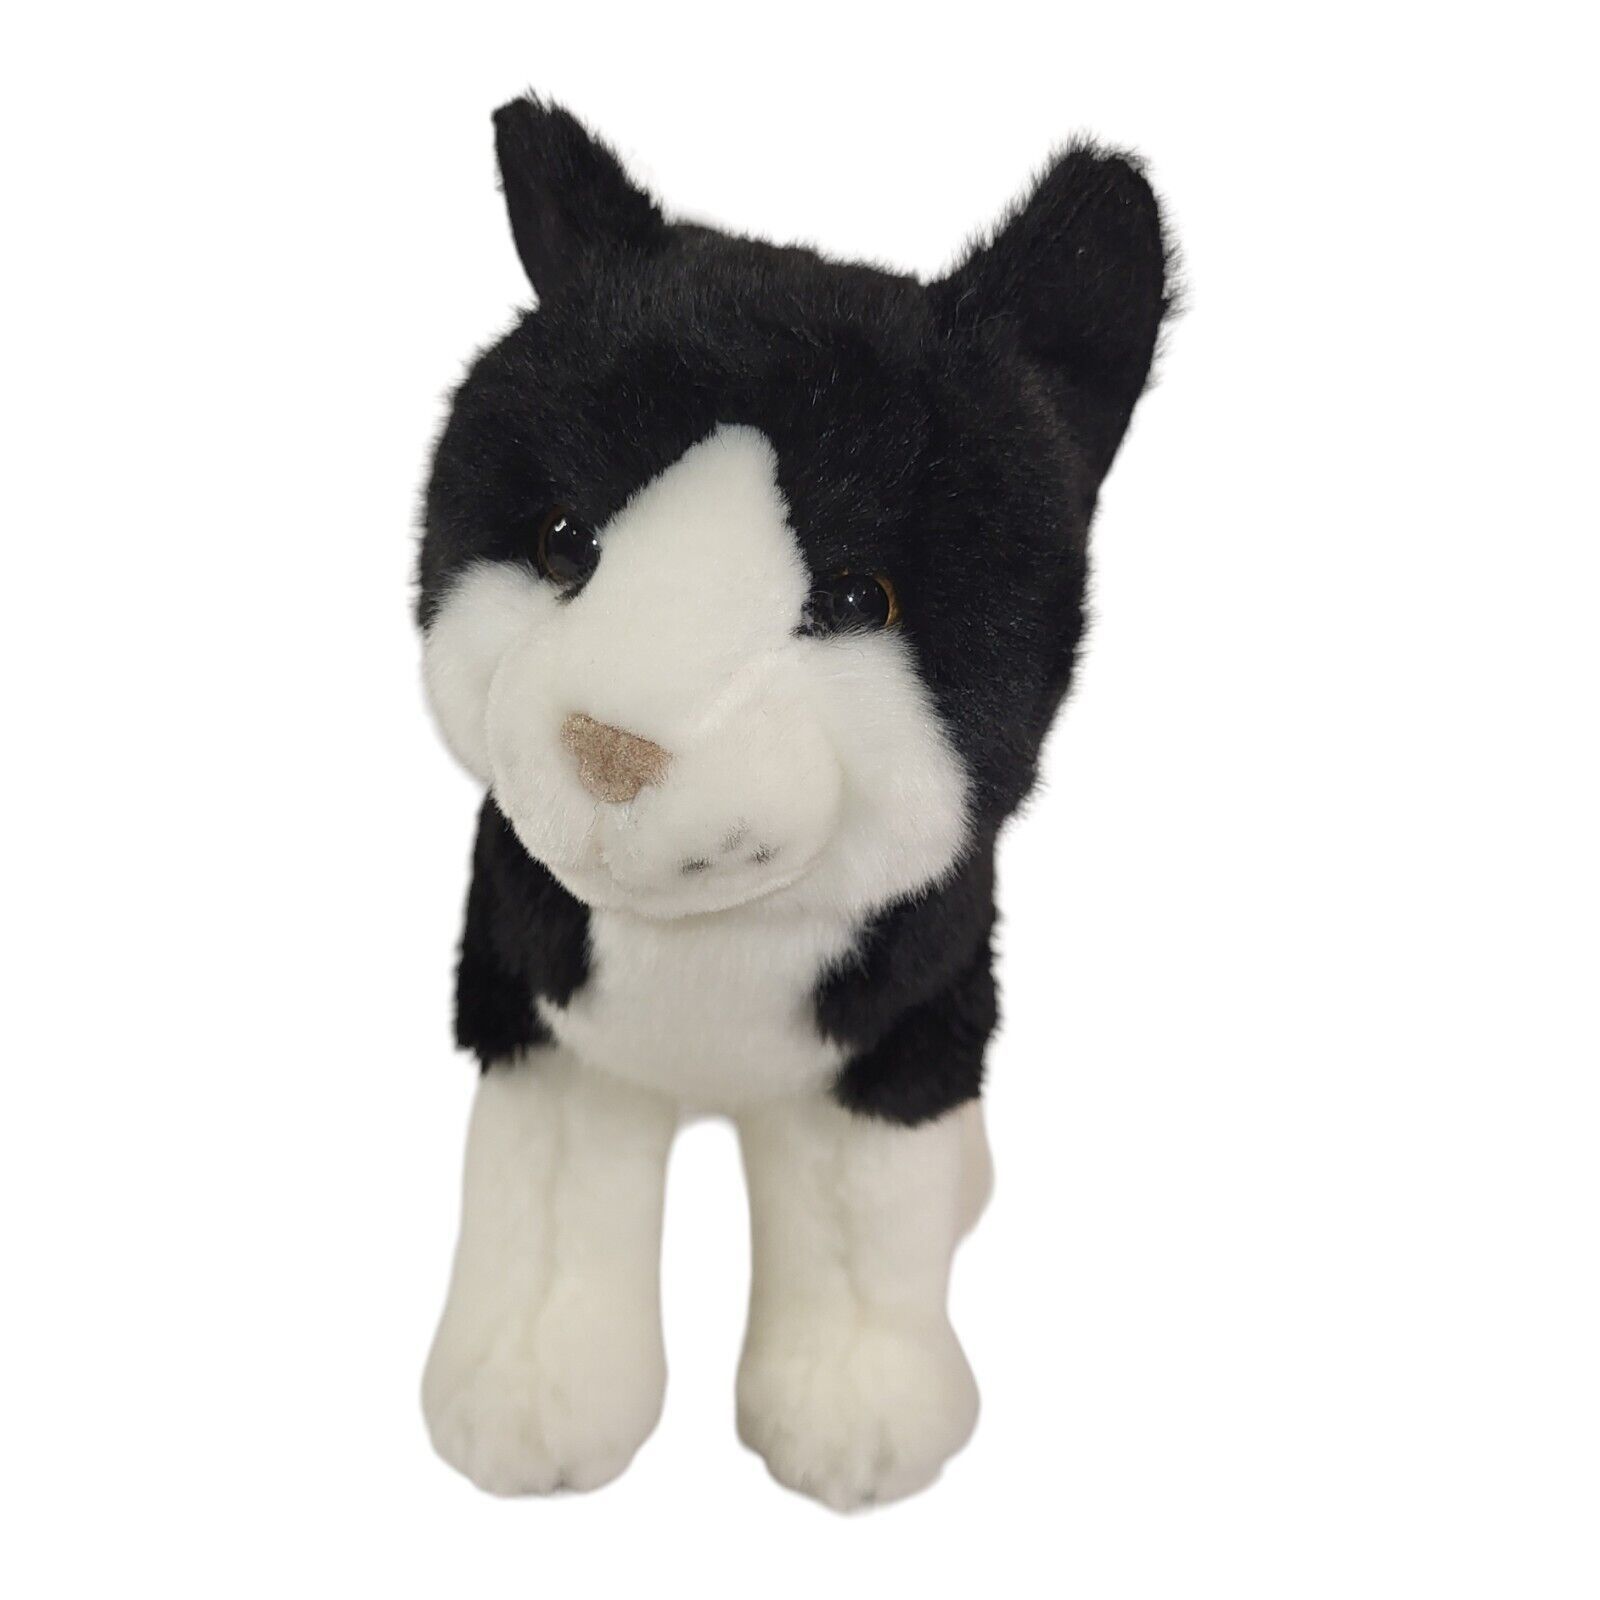 Douglas Cuddle Toys Scooter Black White Cat # 1868 Stuffed Animal Toy 2022 9" - $11.42